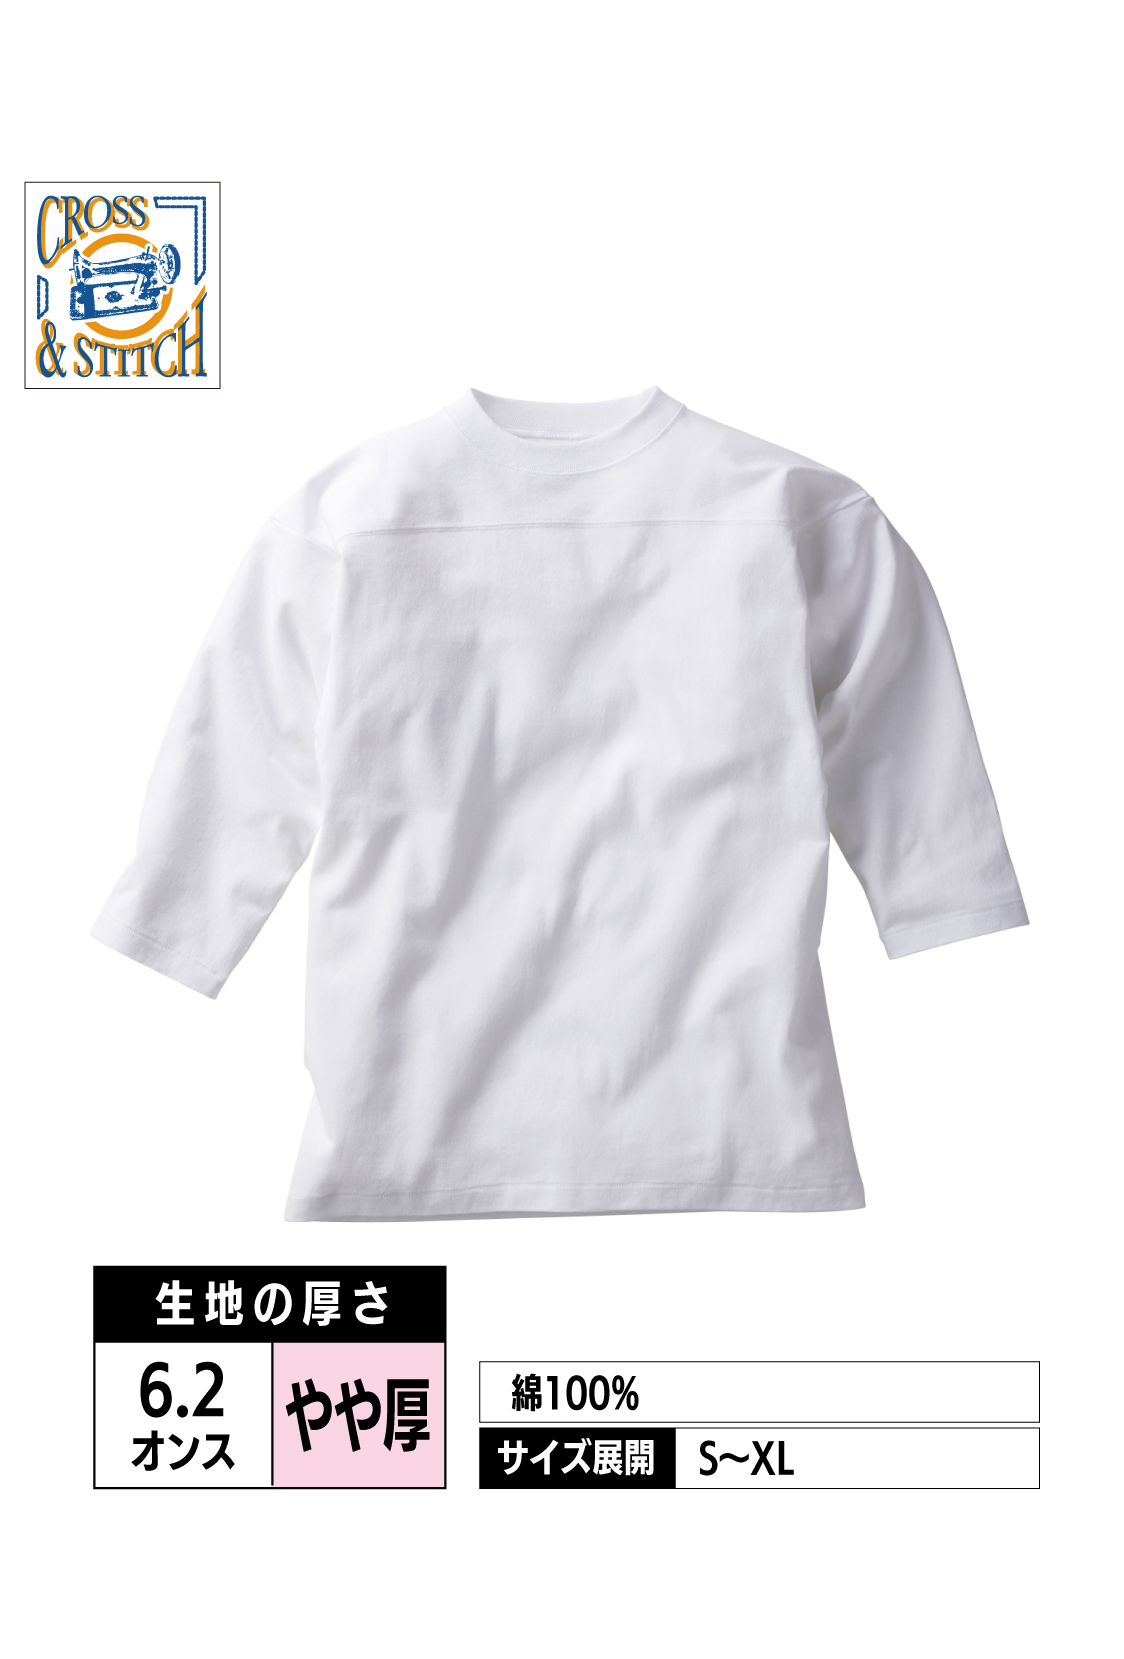 OE1240｜オープンエンド フットボールTシャツ【全4色】CROSS&STITCH